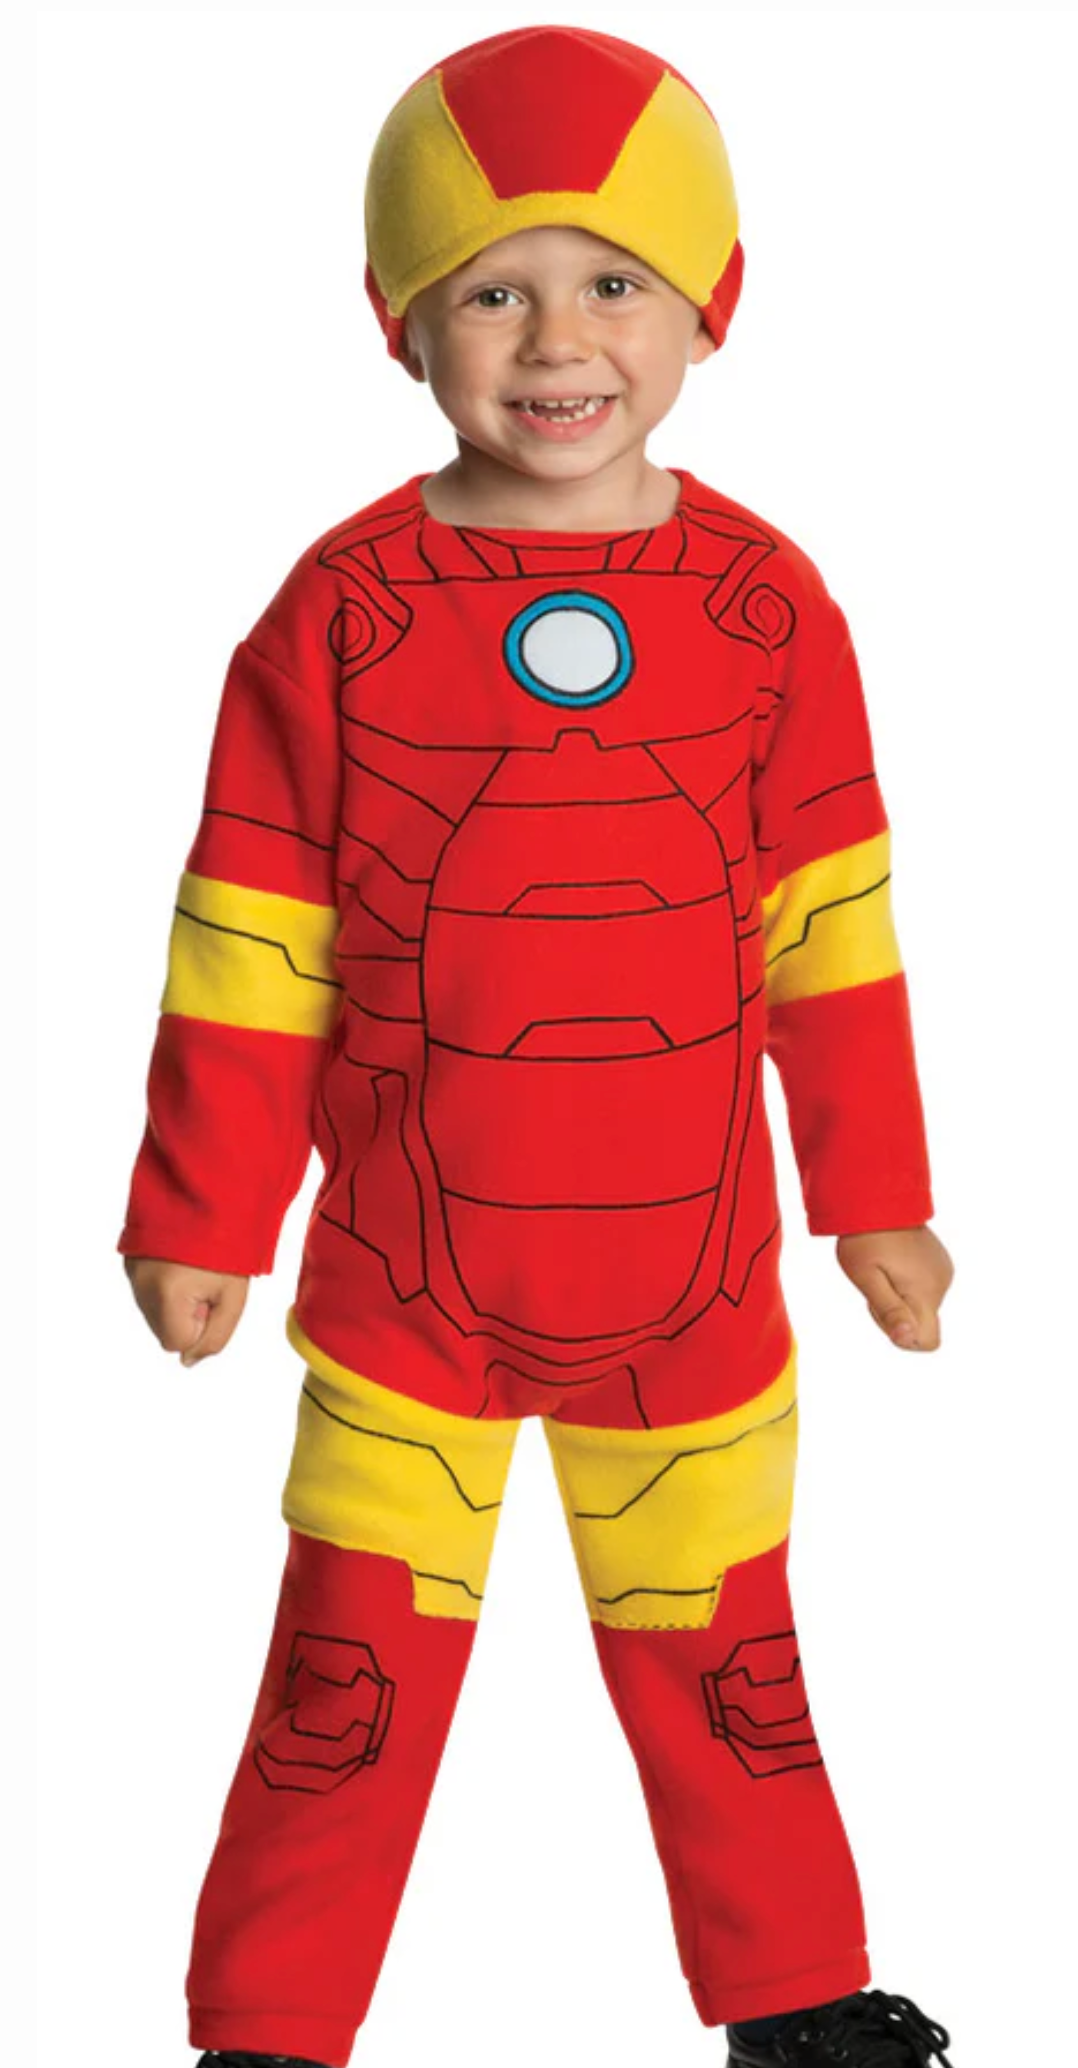 Tiny Iron Hero Costume